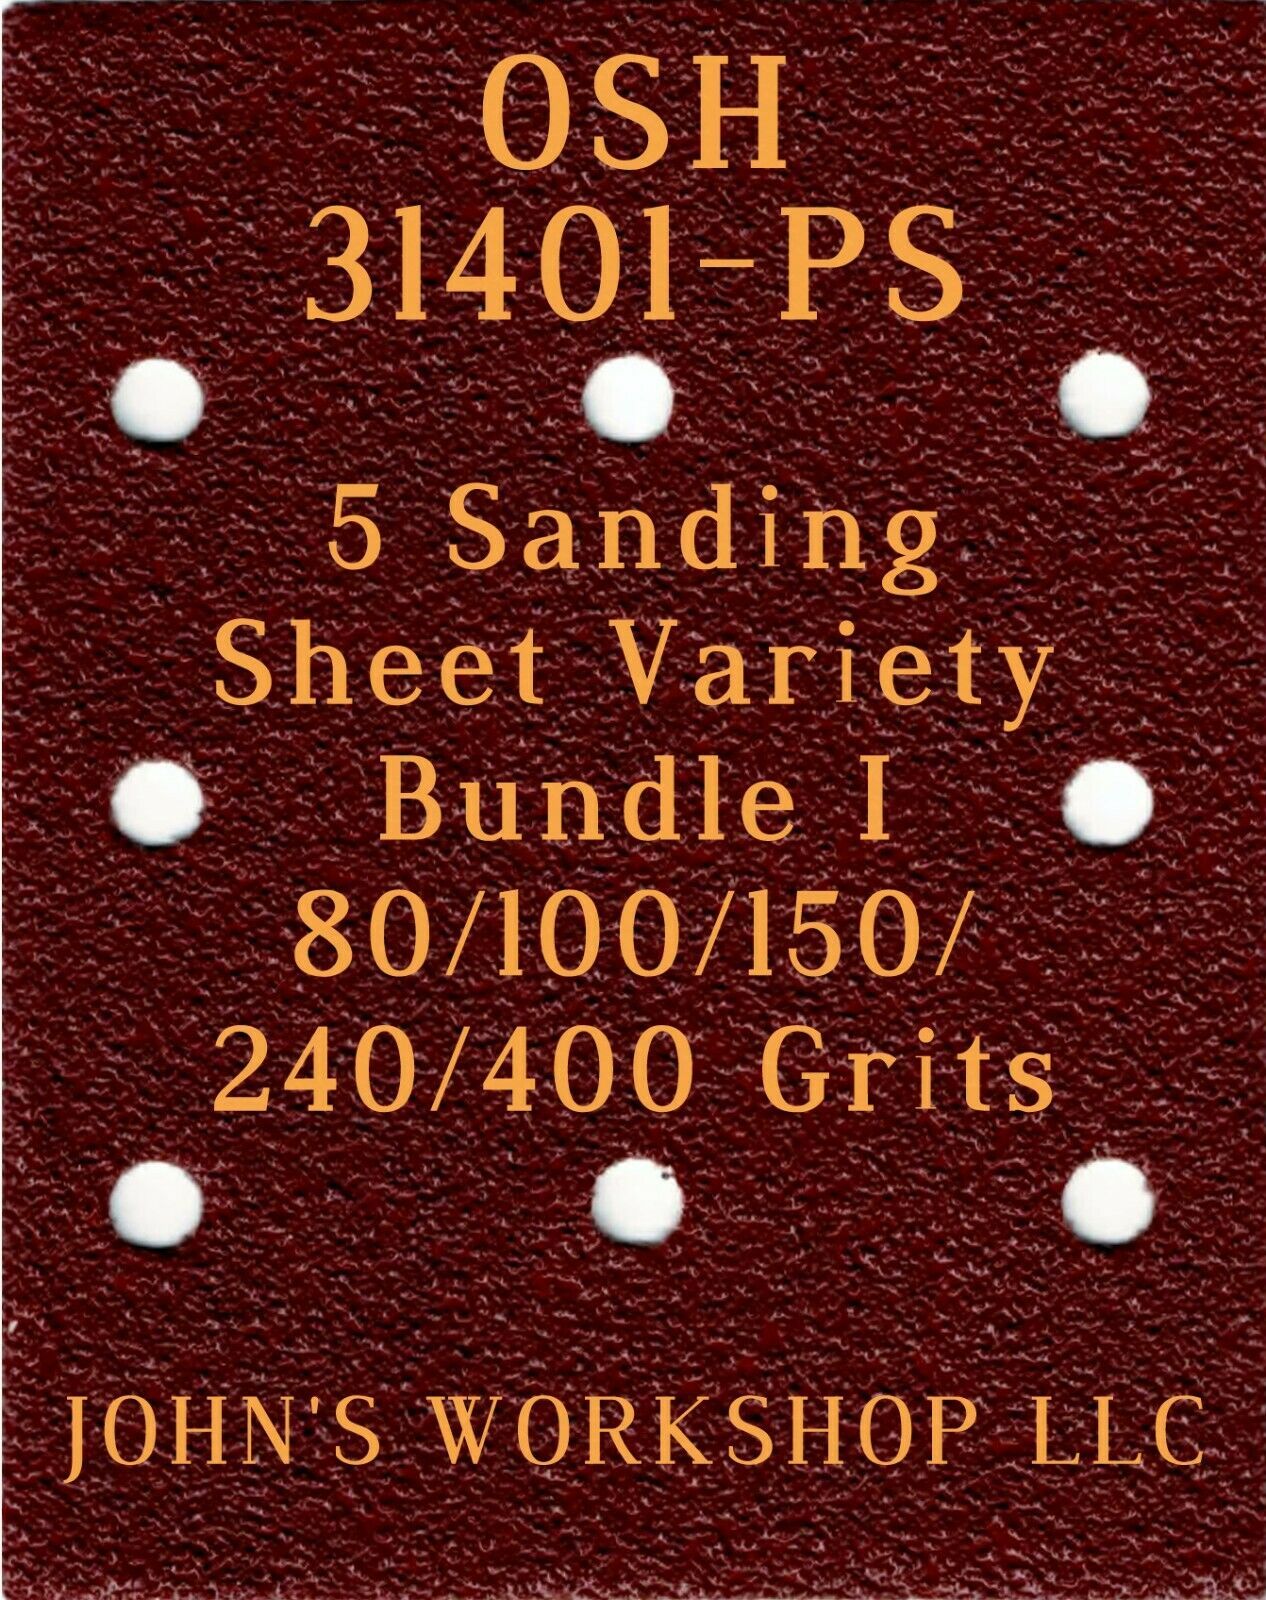 Primary image for OSH 31401-PS - 80/100/150/240/400 Grits - 5 Sandpaper Variety Bundle I